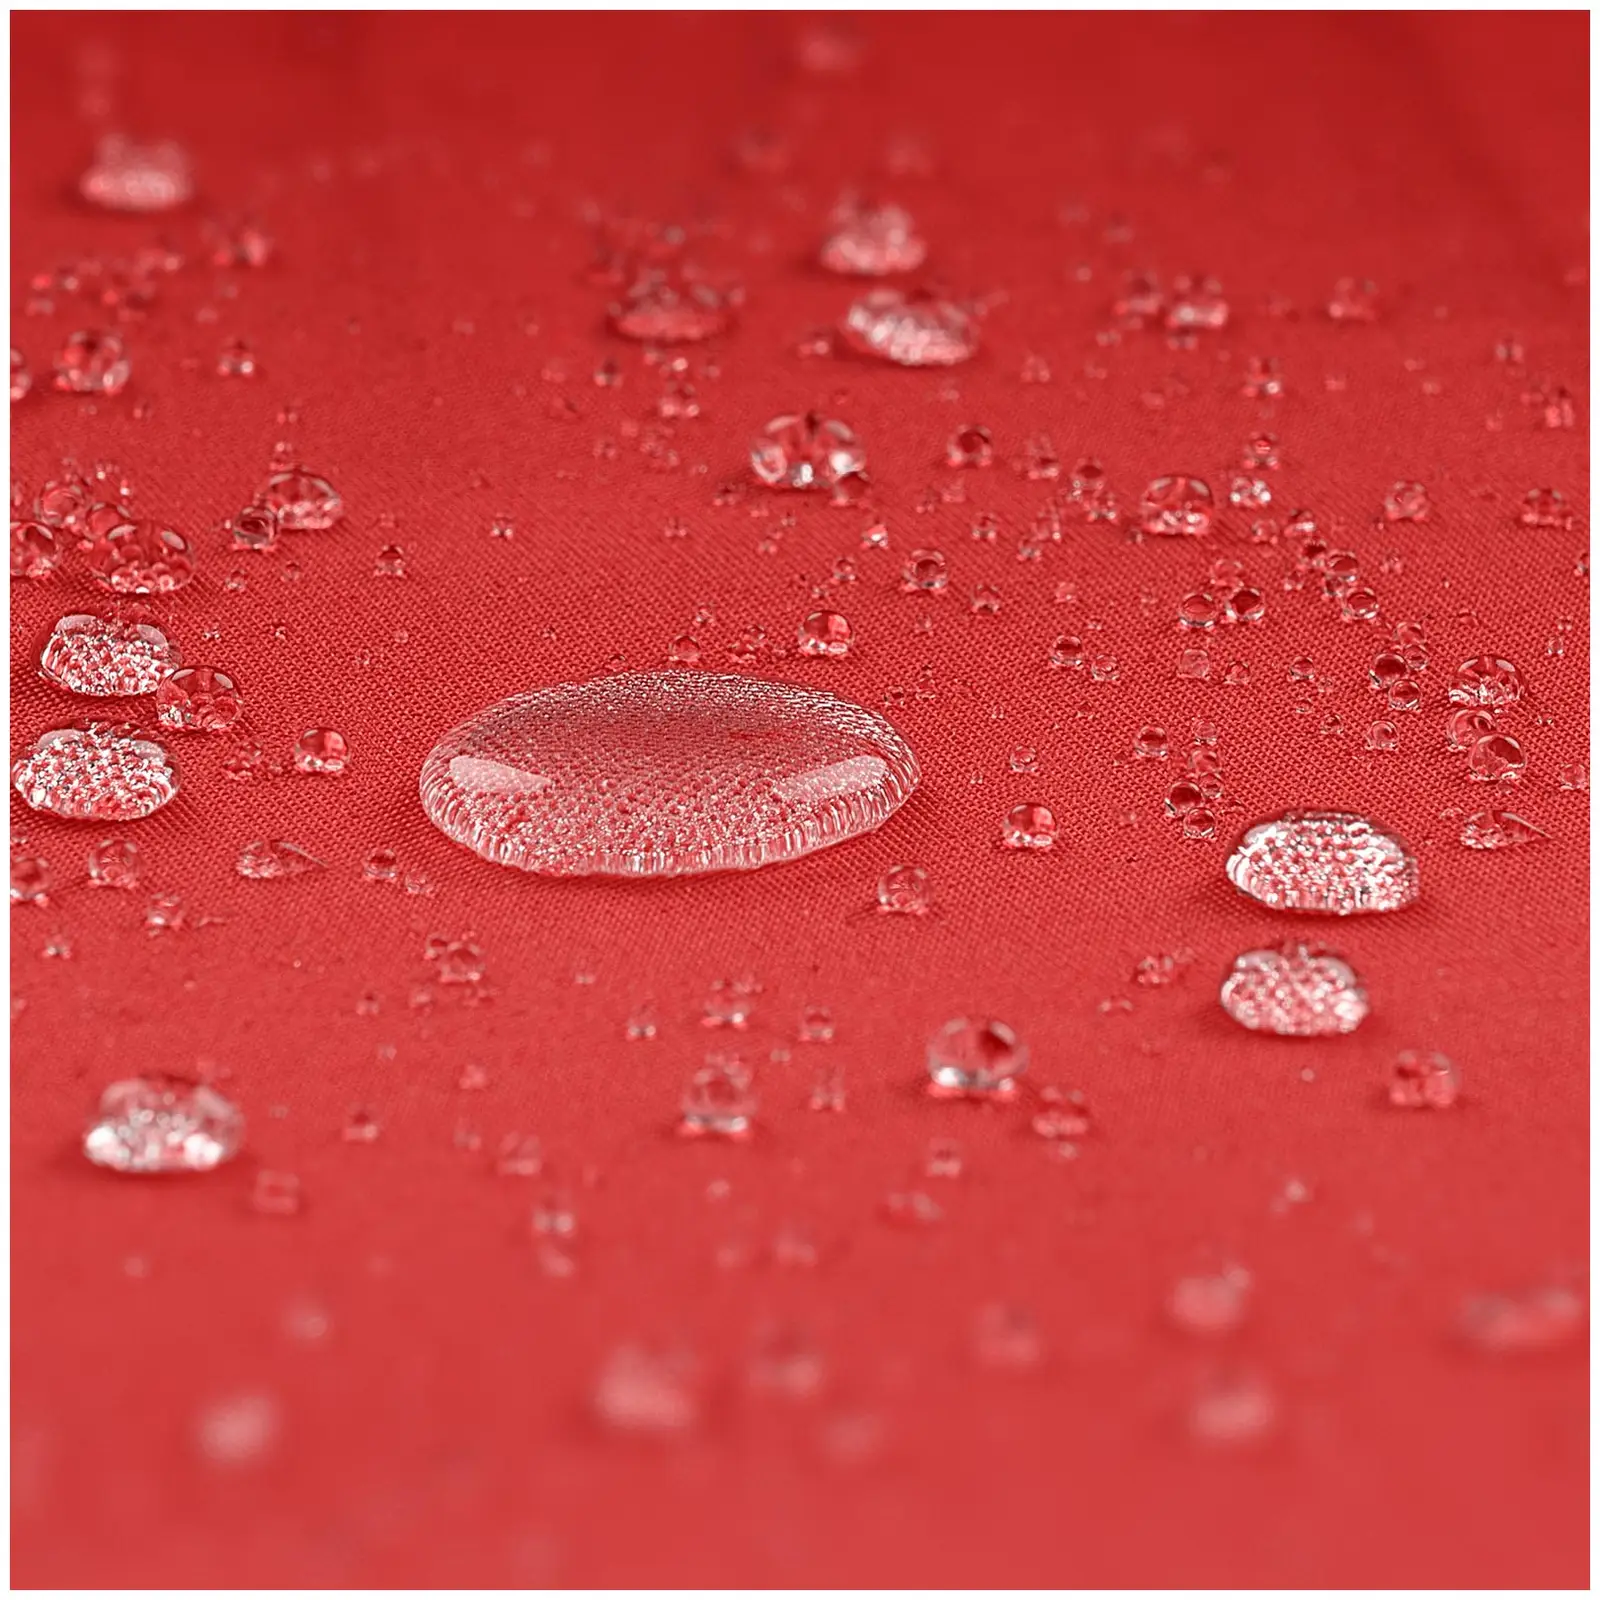 Hængeparasol - rød - firkantet - 250 x 250 cm